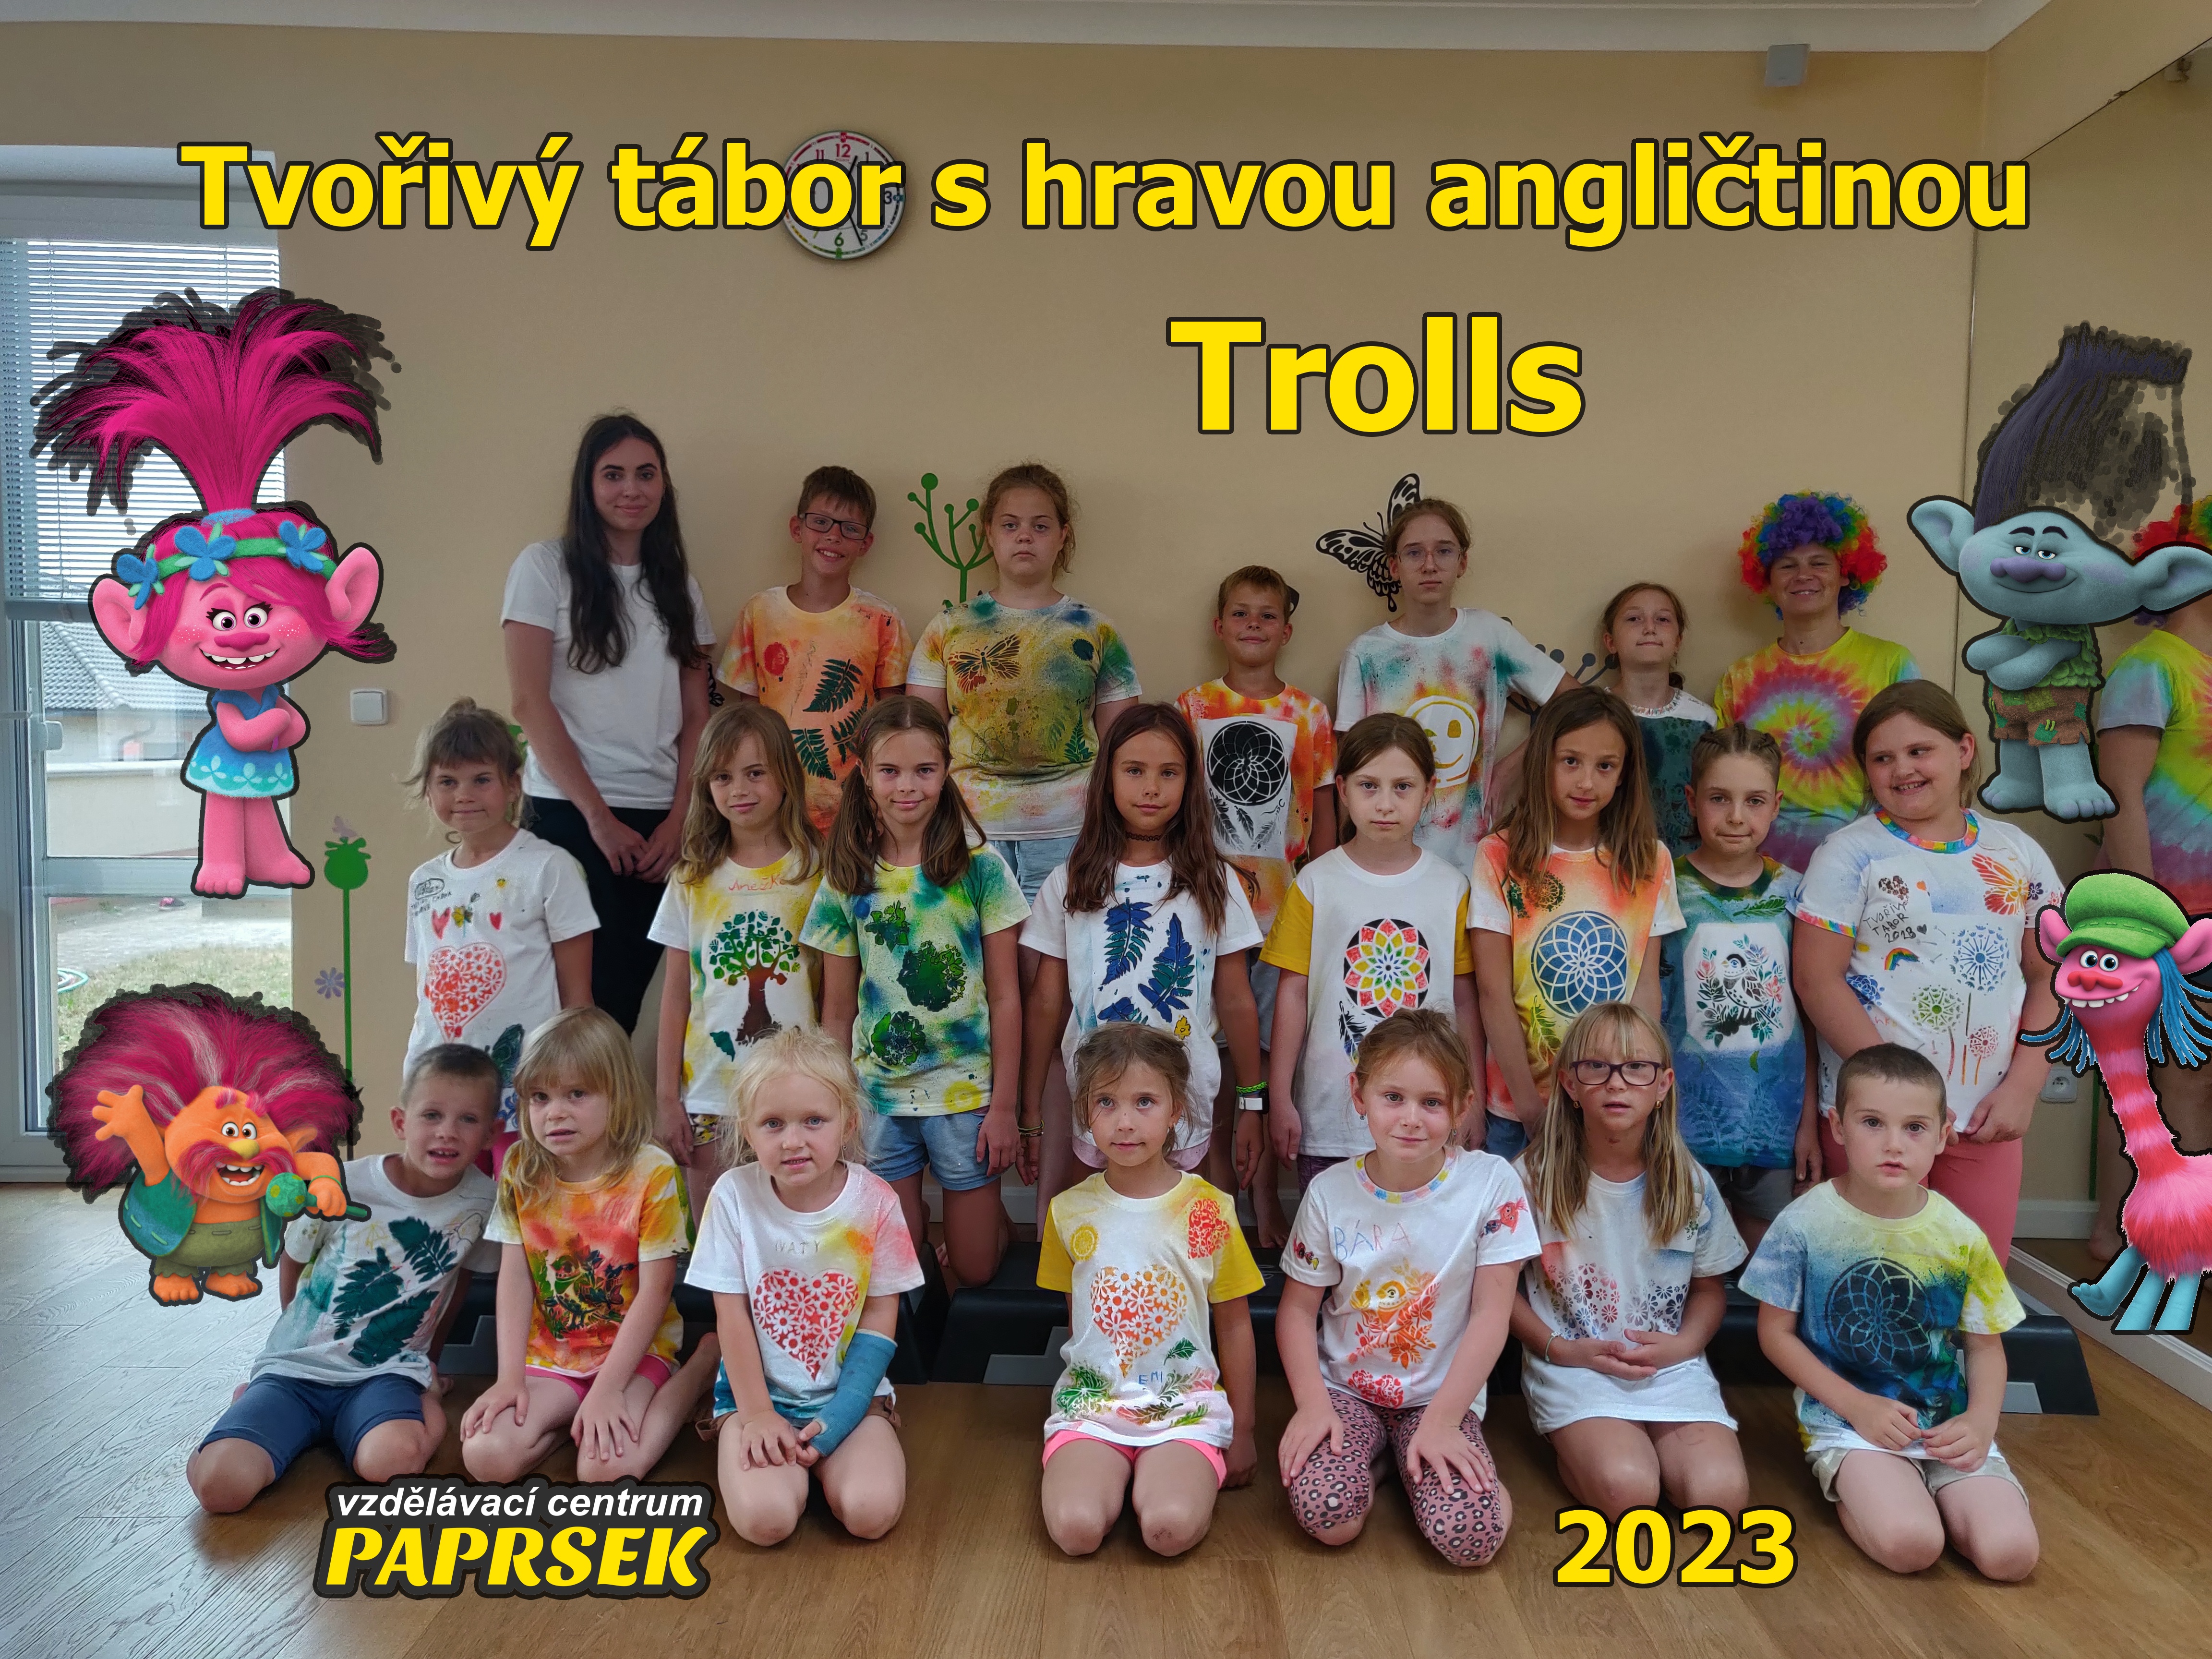 Trolls-tvorivy-tabor_2